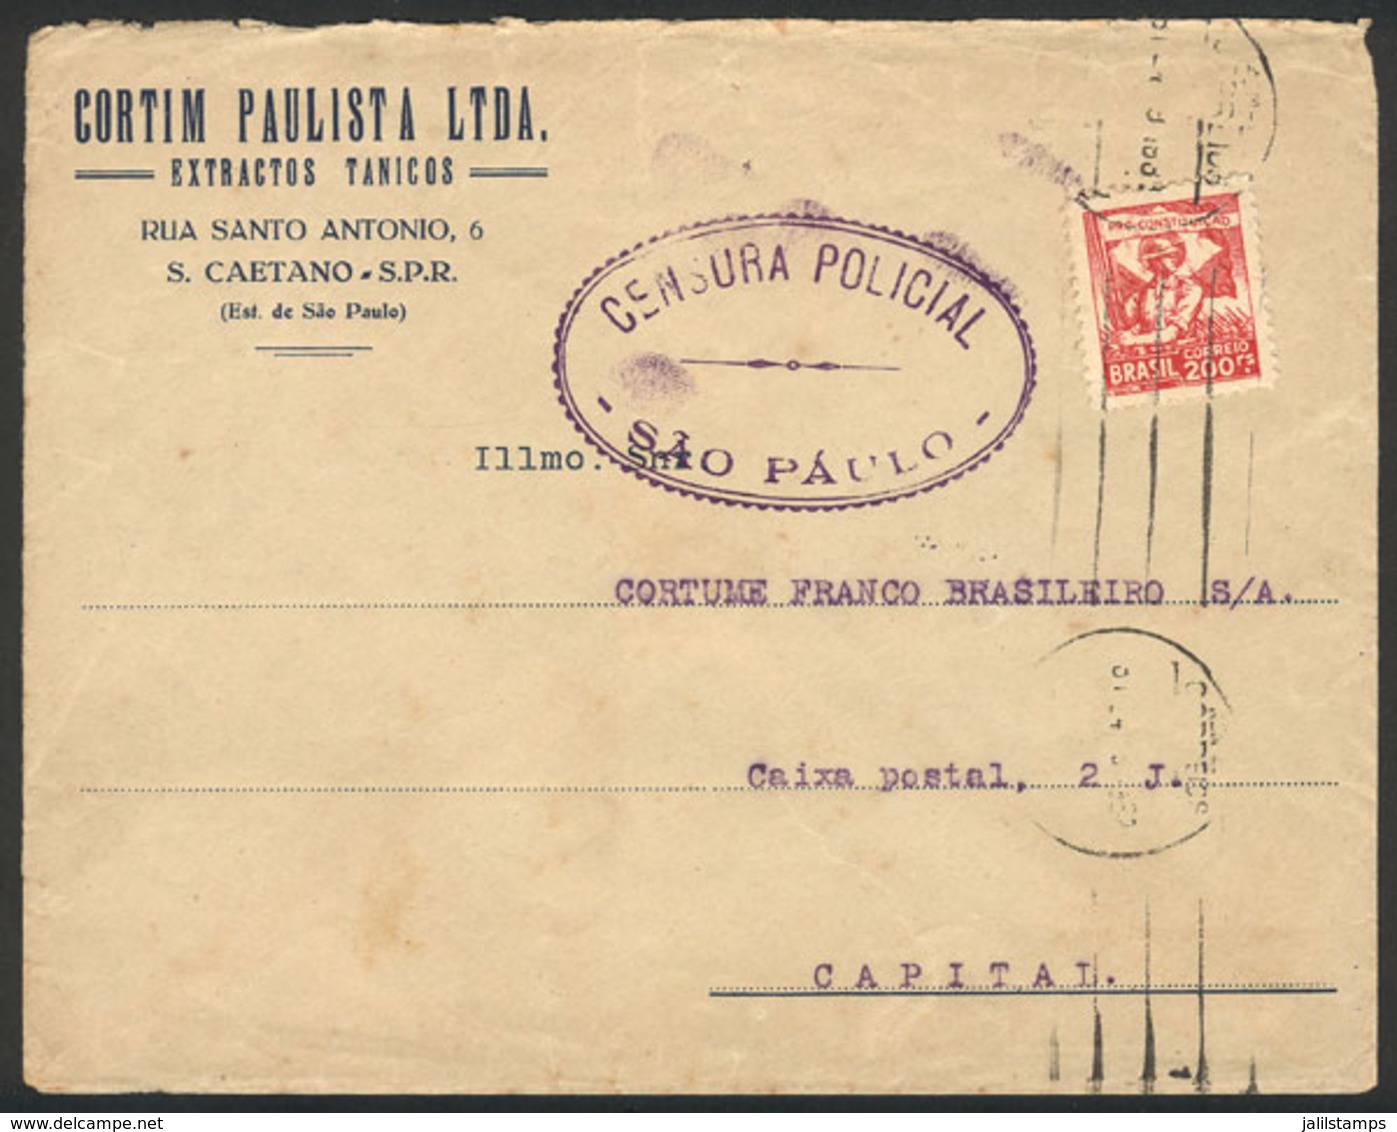 BRAZIL: Cover Sent From S.Caetano To Rio On 24/SE/1932, Franked By RHM.C-47 ALONE, Marked "CENSURA POLICIAL - SAO PAULO" - Prefilatelia